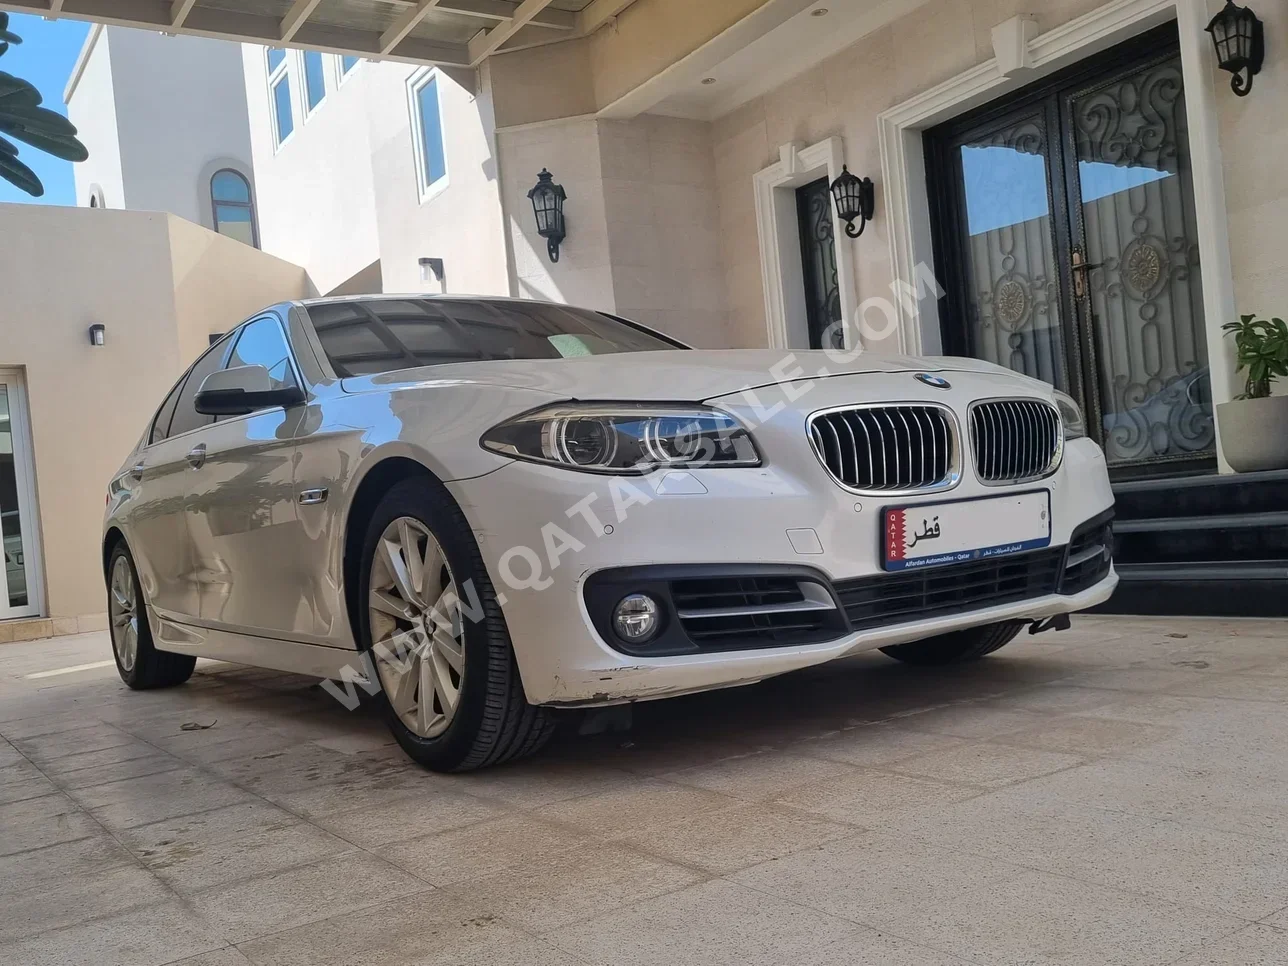  BMW  5-Series  528i  2016  Automatic  75,000 Km  4 Cylinder  Rear Wheel Drive (RWD)  Sedan  White  With Warranty